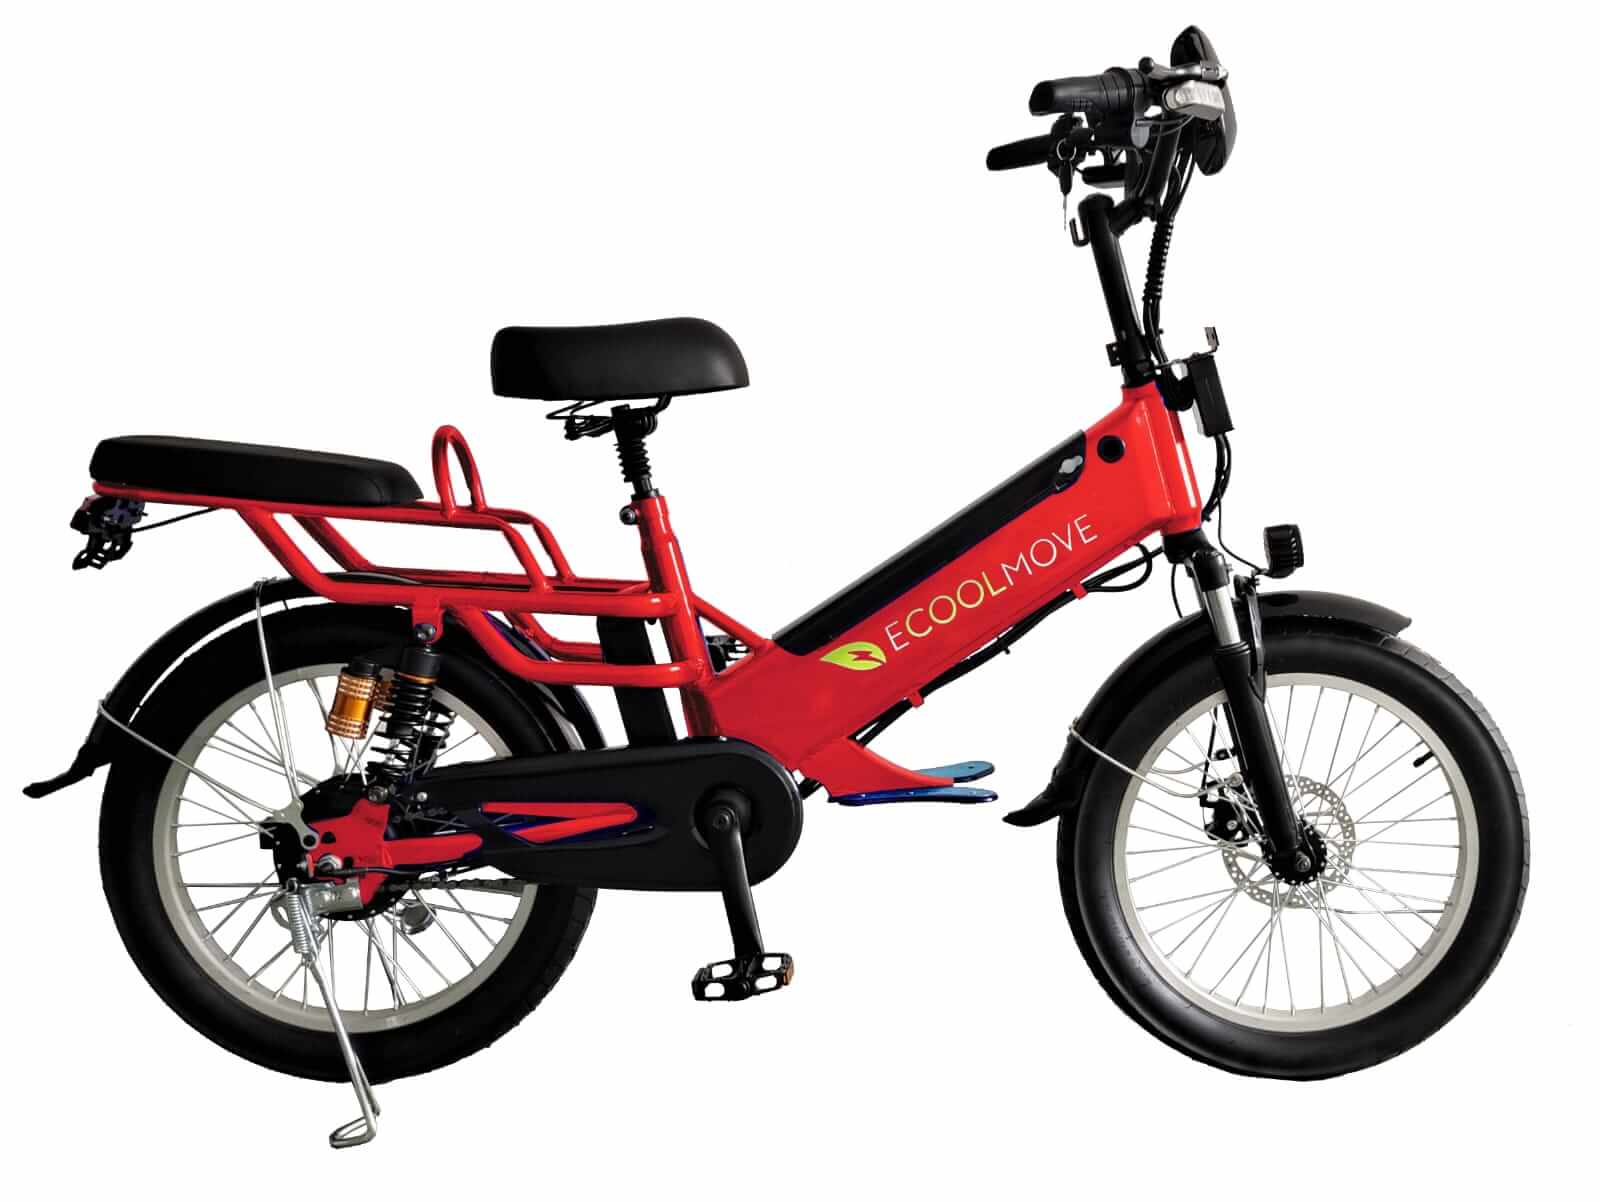 Bicicleta elétrica modelo EB0001 - Ecoolmove